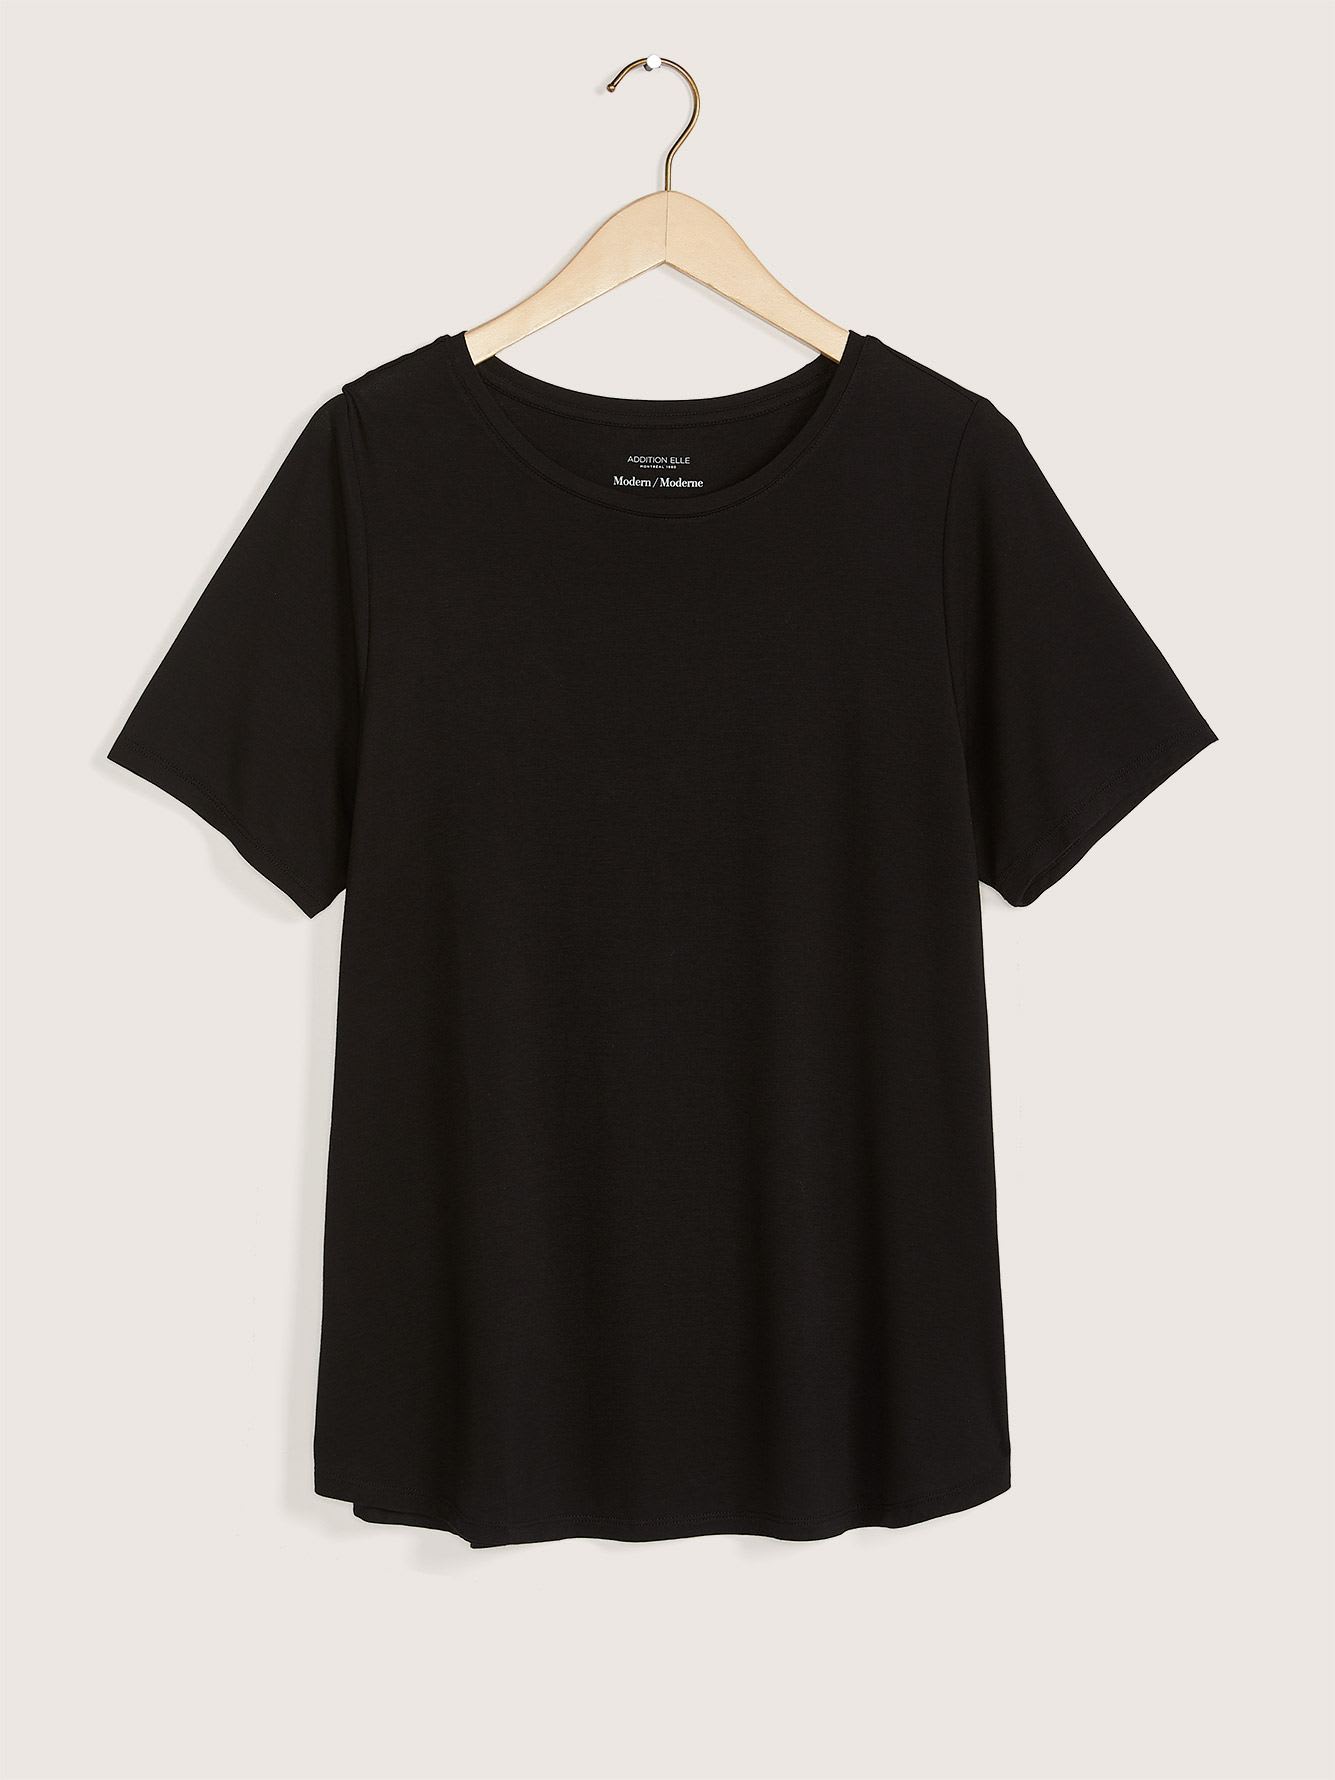 Modern-Fit Crew Neck T-Shirt - Addition Elle